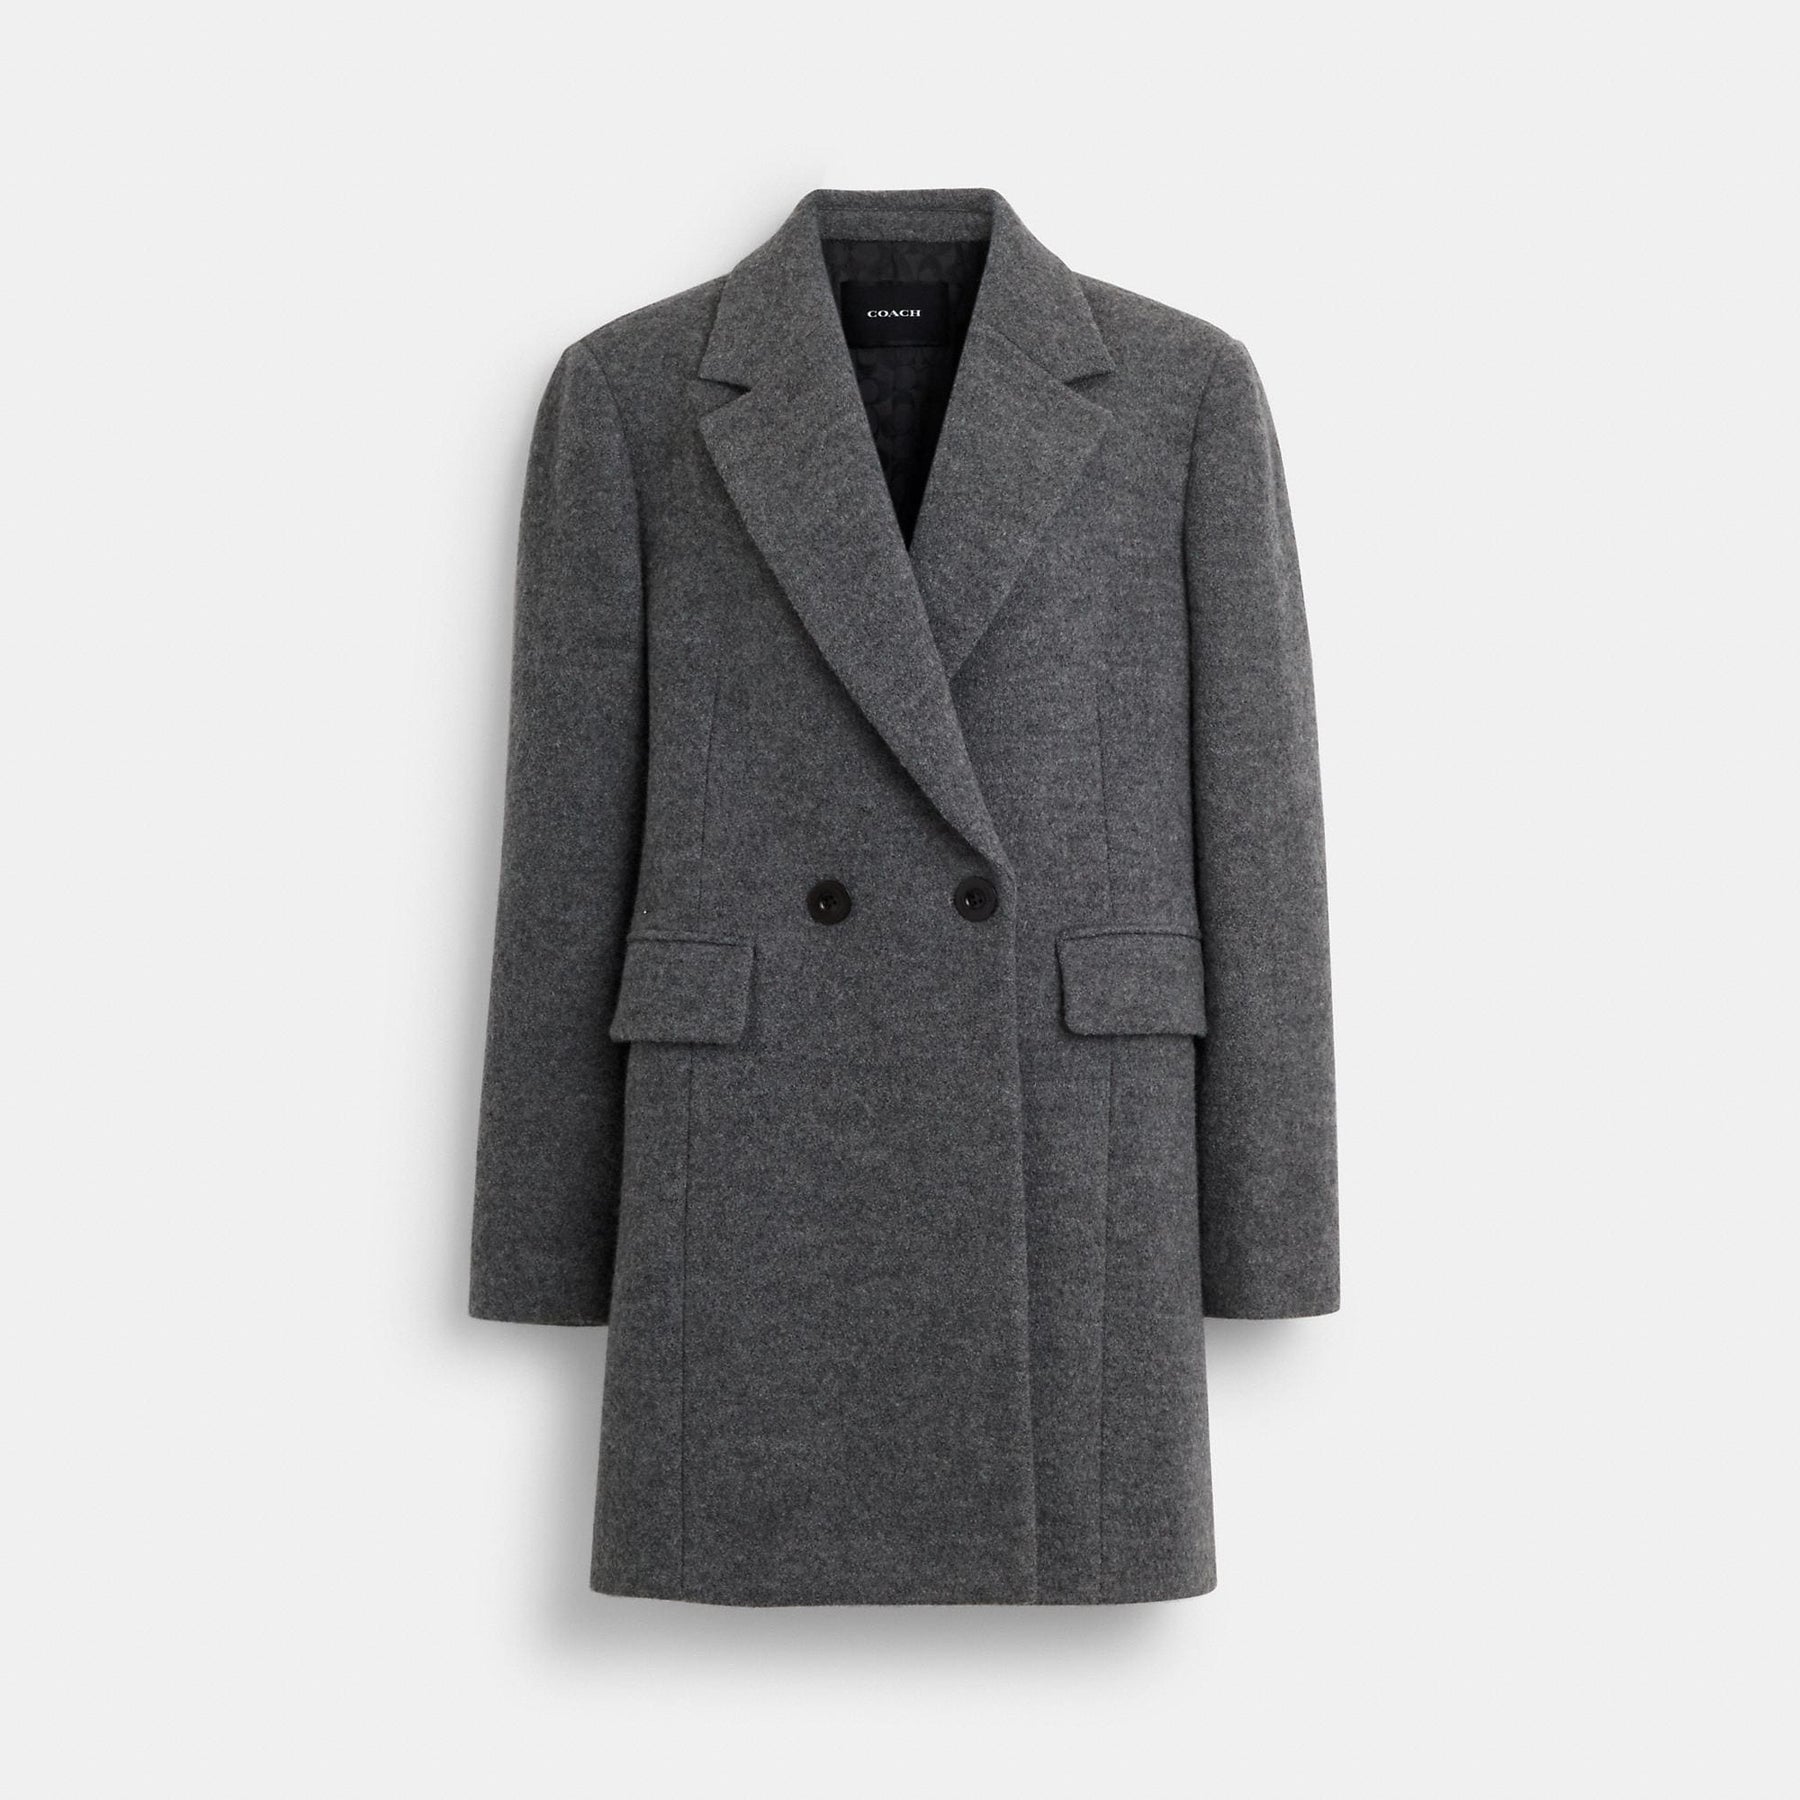 Coach Outlet Wool Chester Coat | Shop Premium Outlets